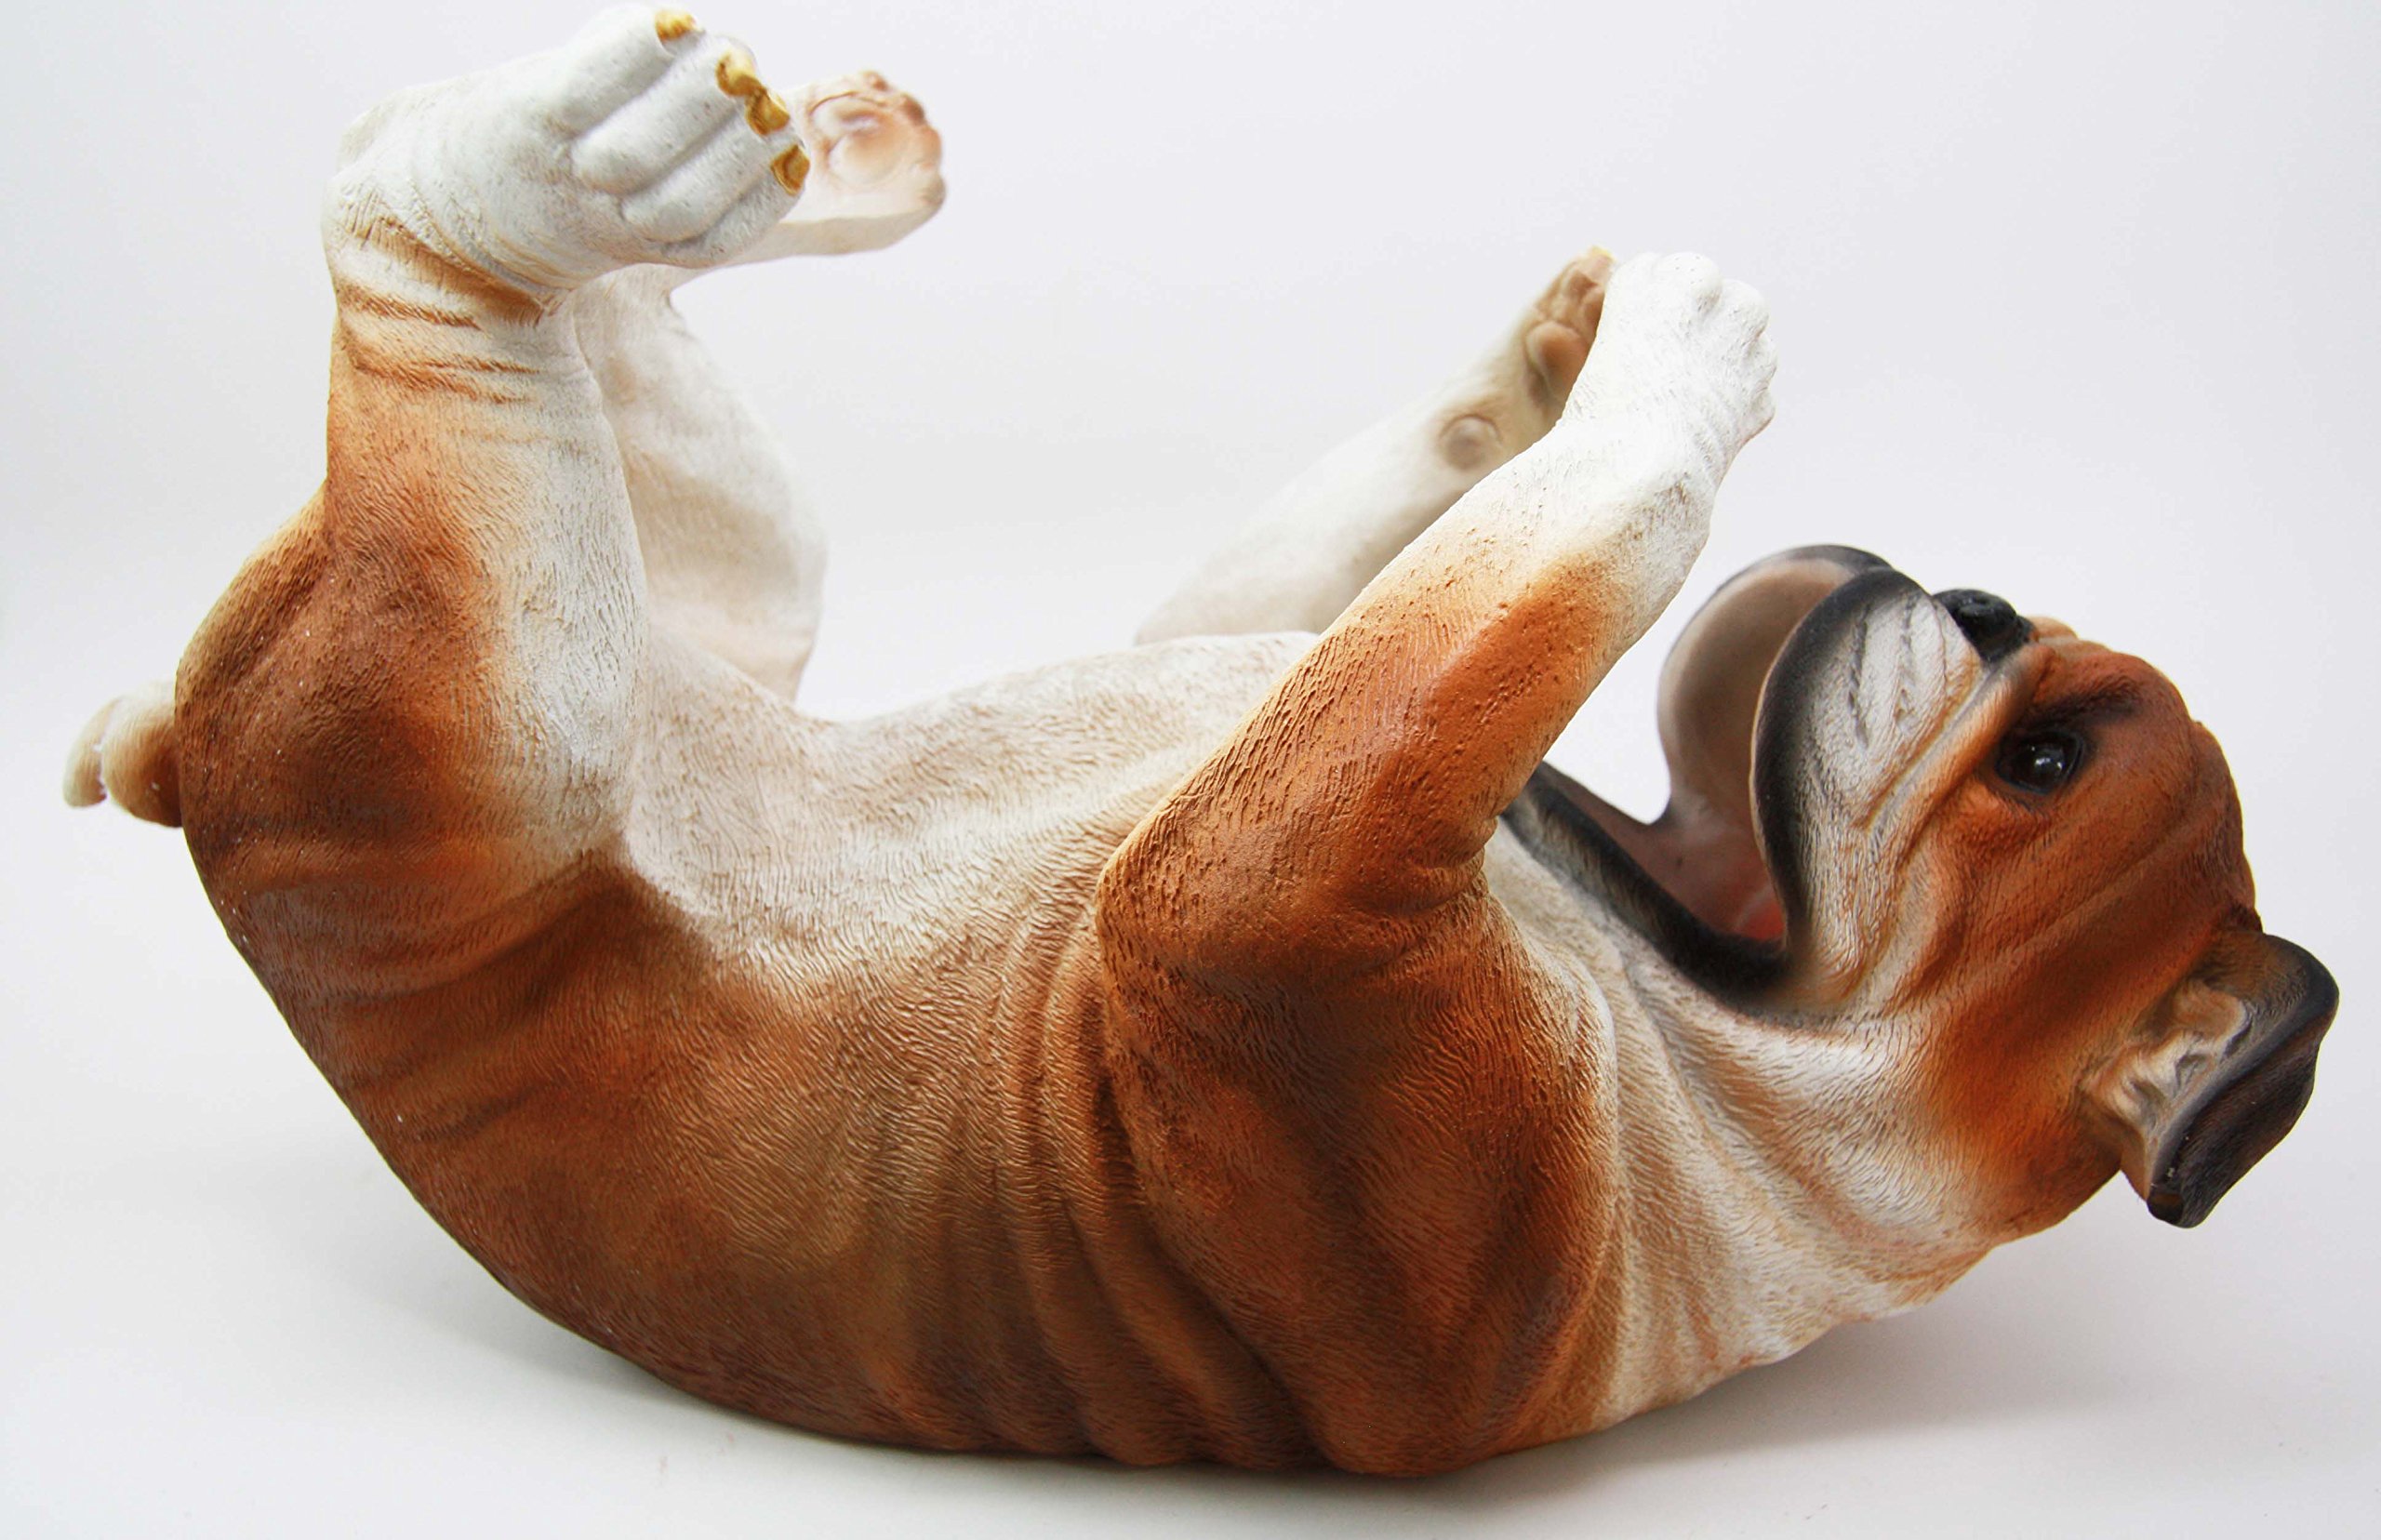 Atlantic Collectibles British Bulldog Canine Dog 10.25" Long Wine Bottle Holder Caddy Figurine